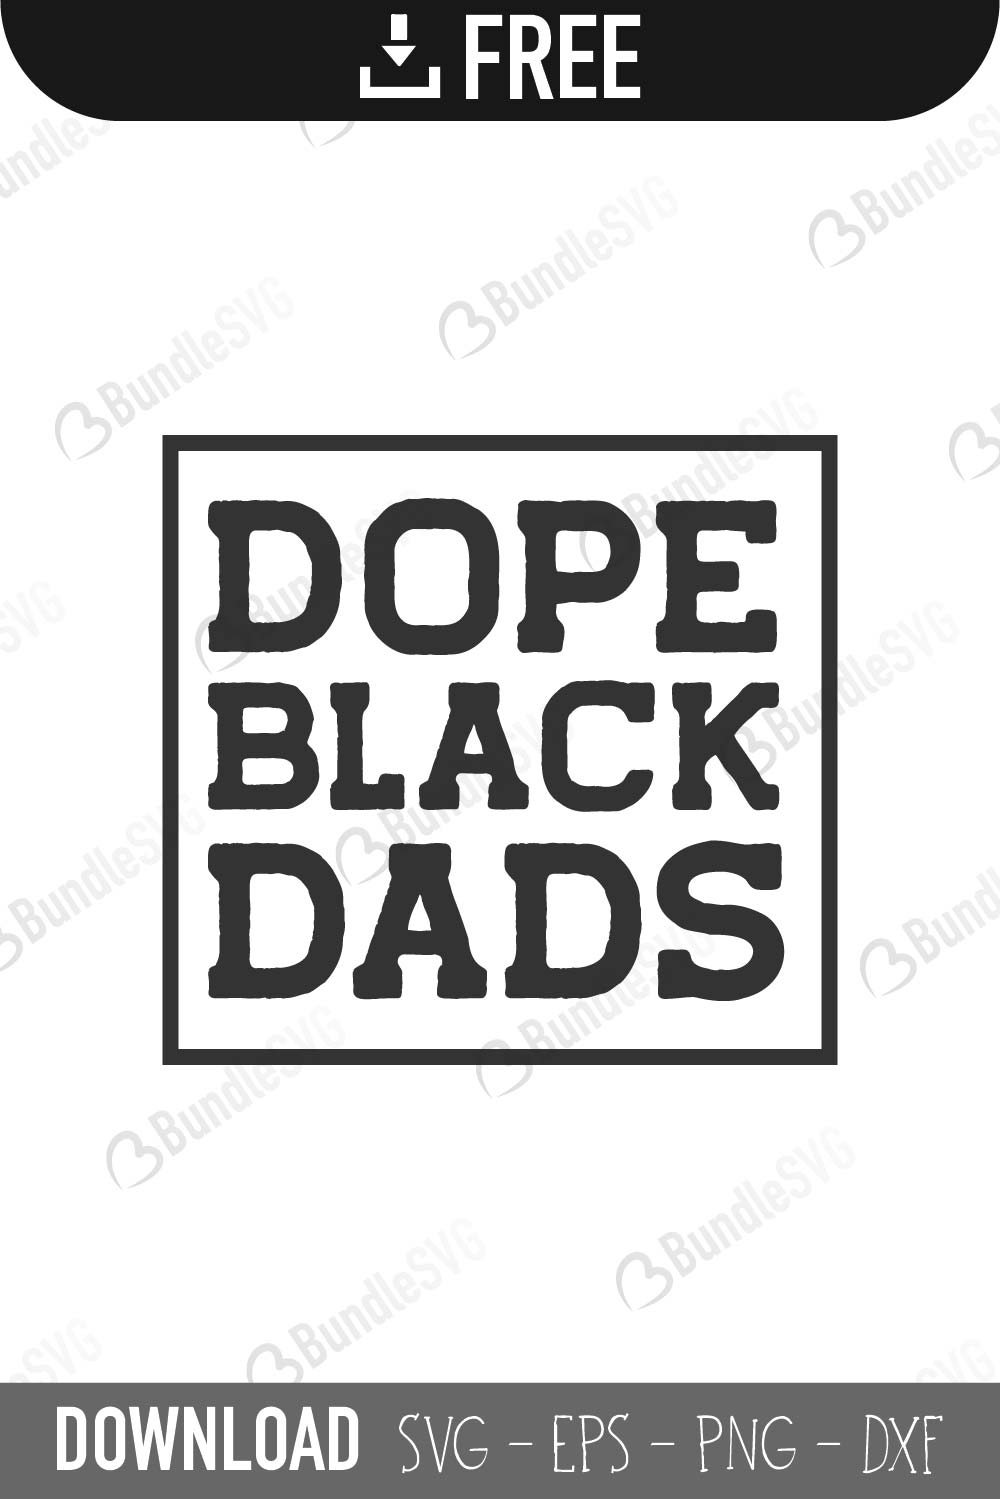 Dope Black Dads Svg Cut Files Free Download Bundlesvg